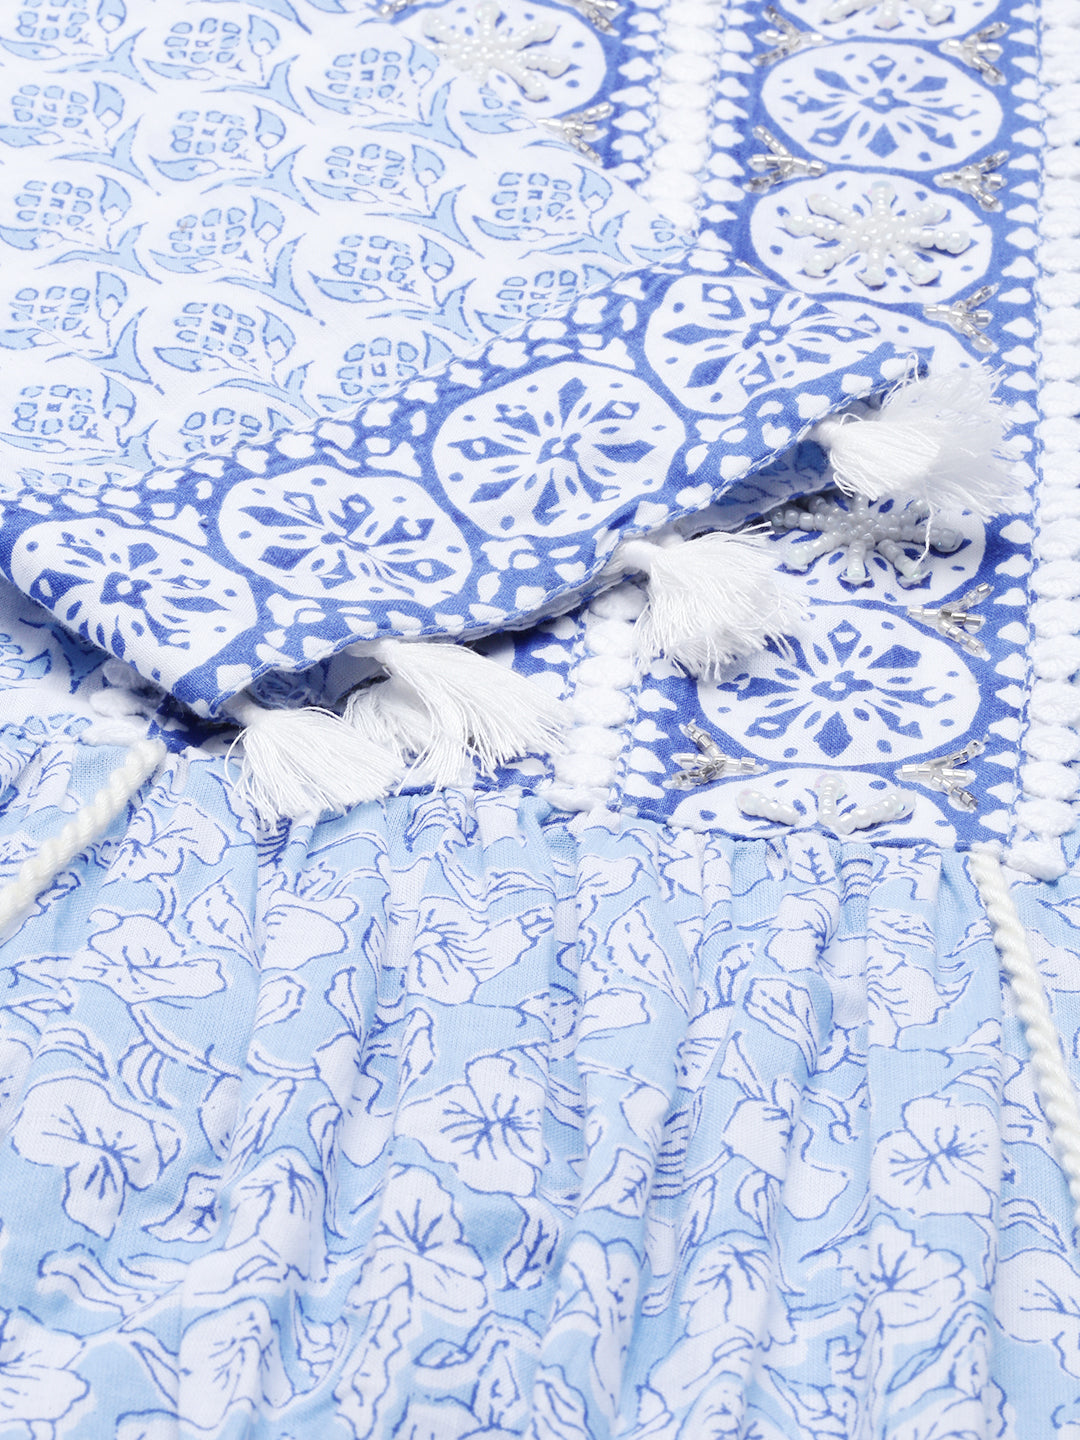 Neeru'S Blue Color, Cotton Fabric Tunic